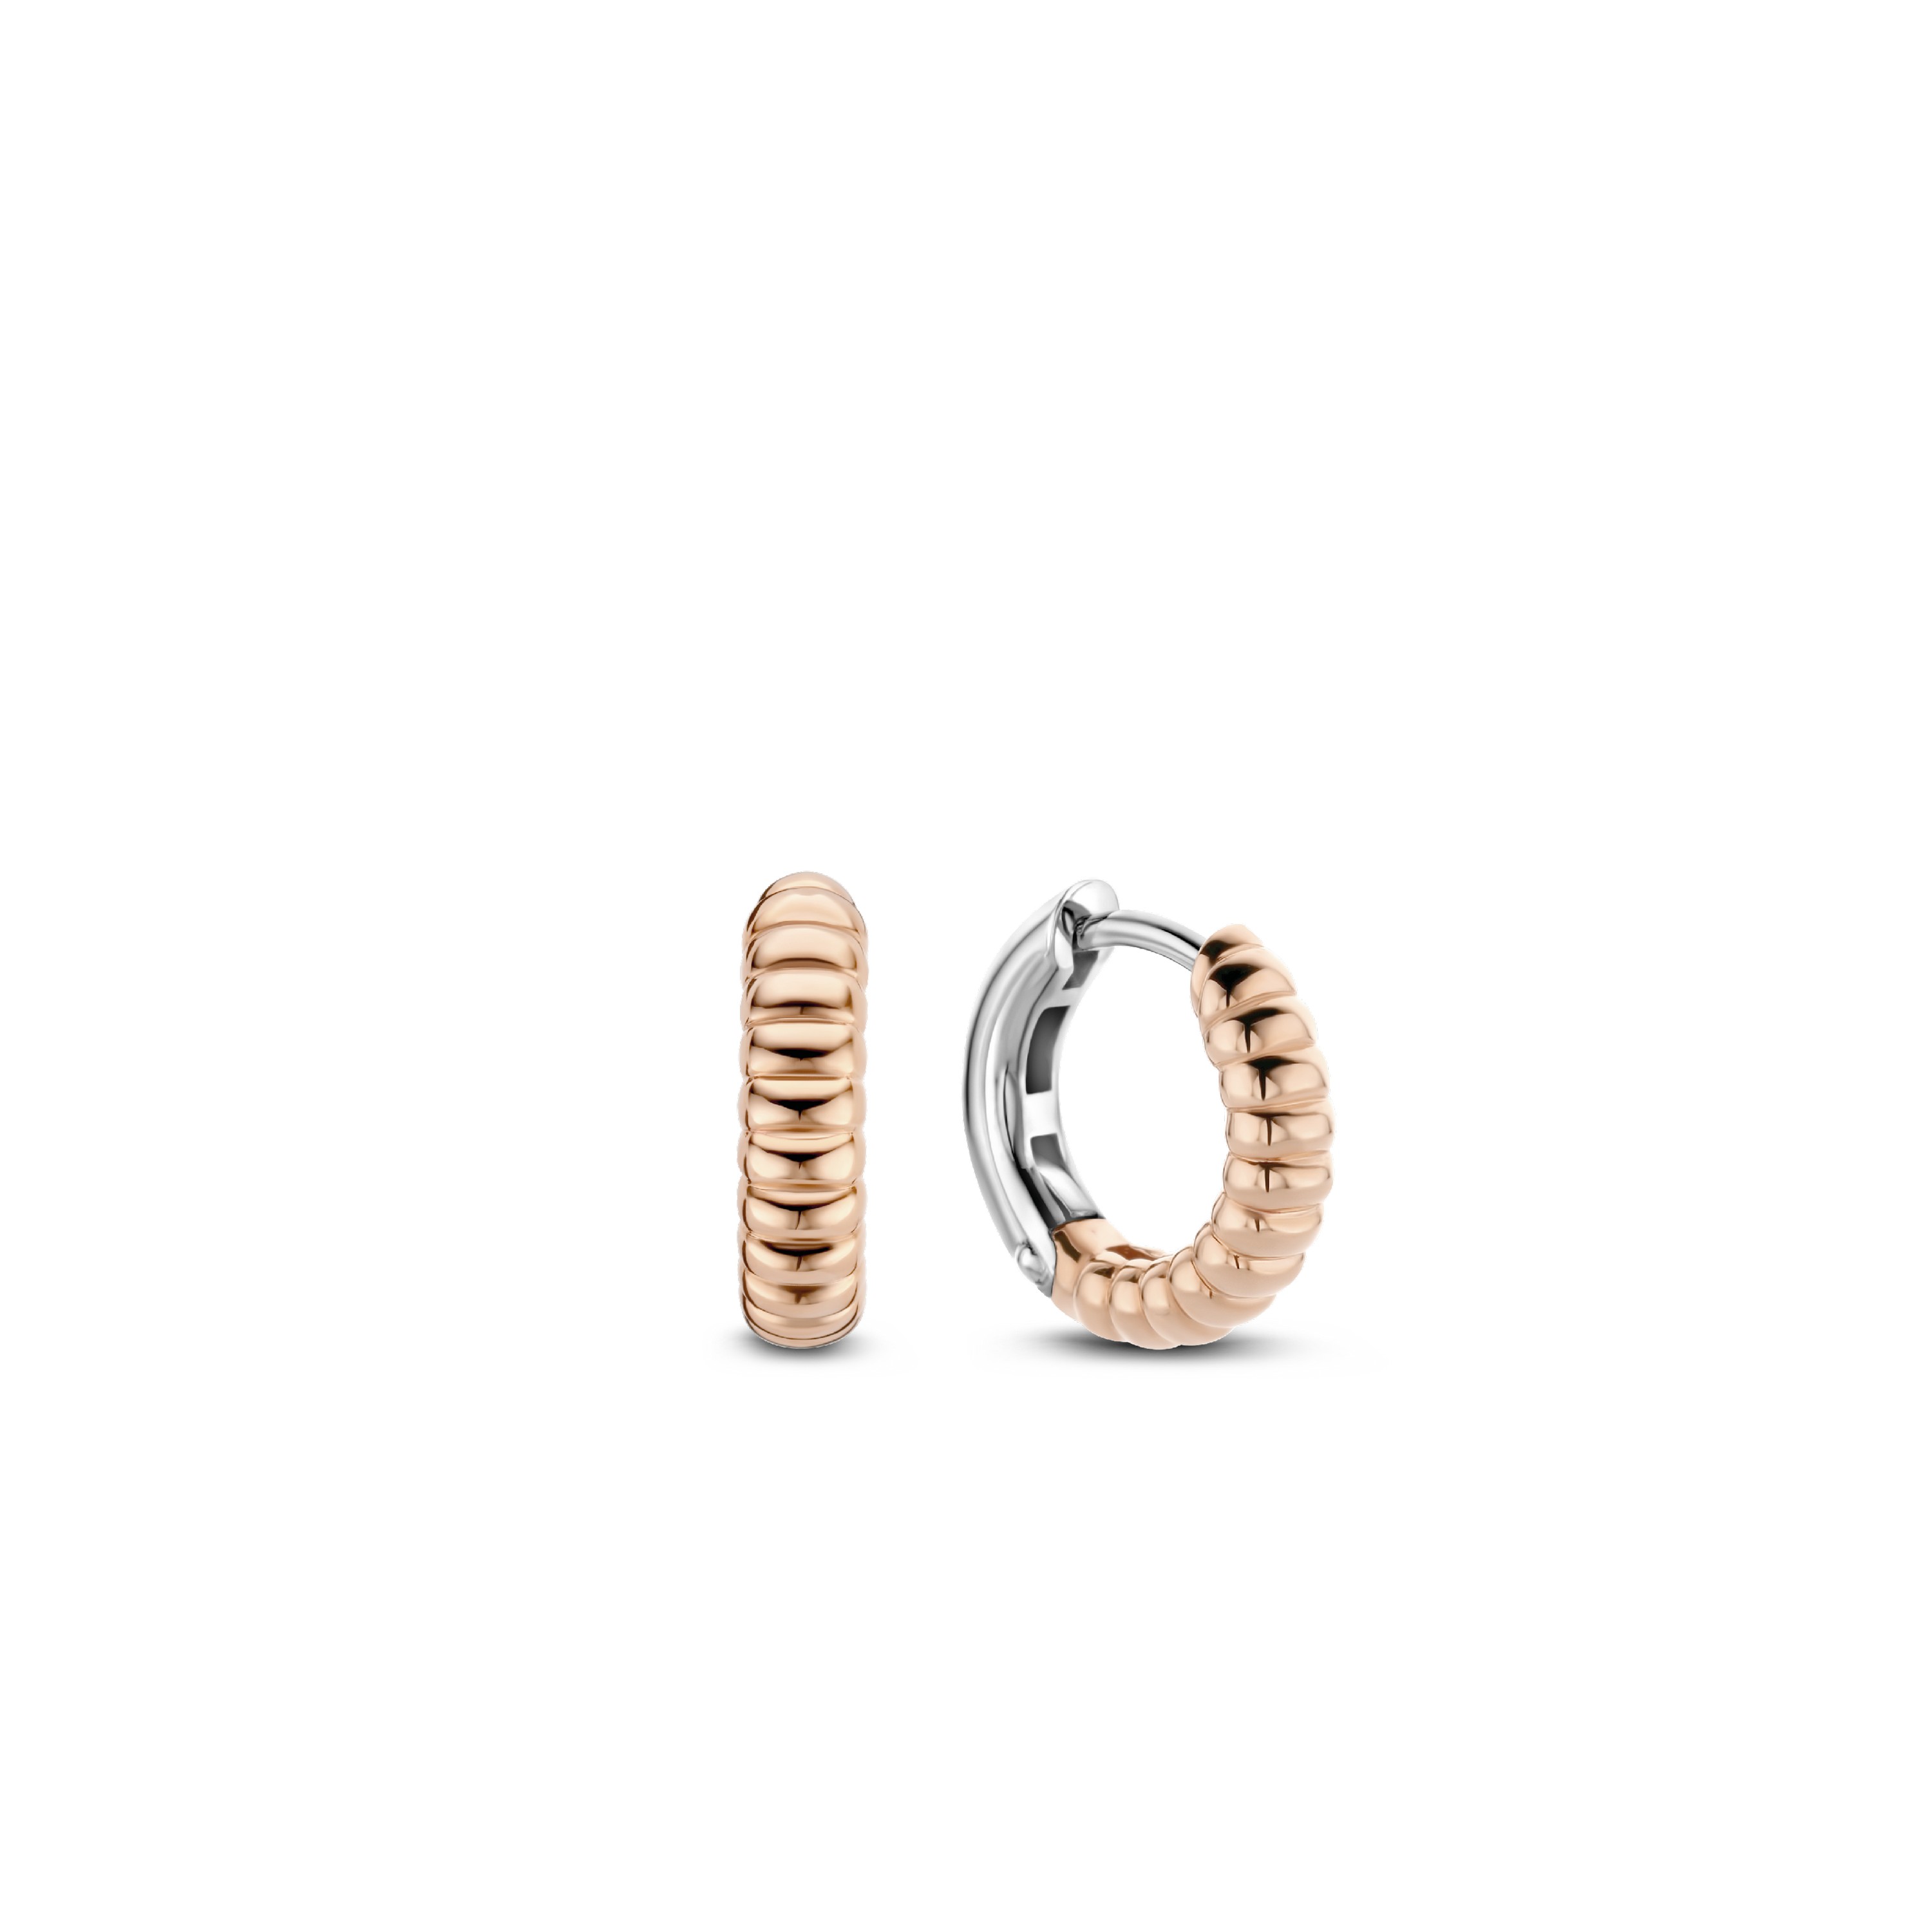 TI SENTO - Milano Earrings 7839SR Gala Jewelers Inc. White Oak, PA